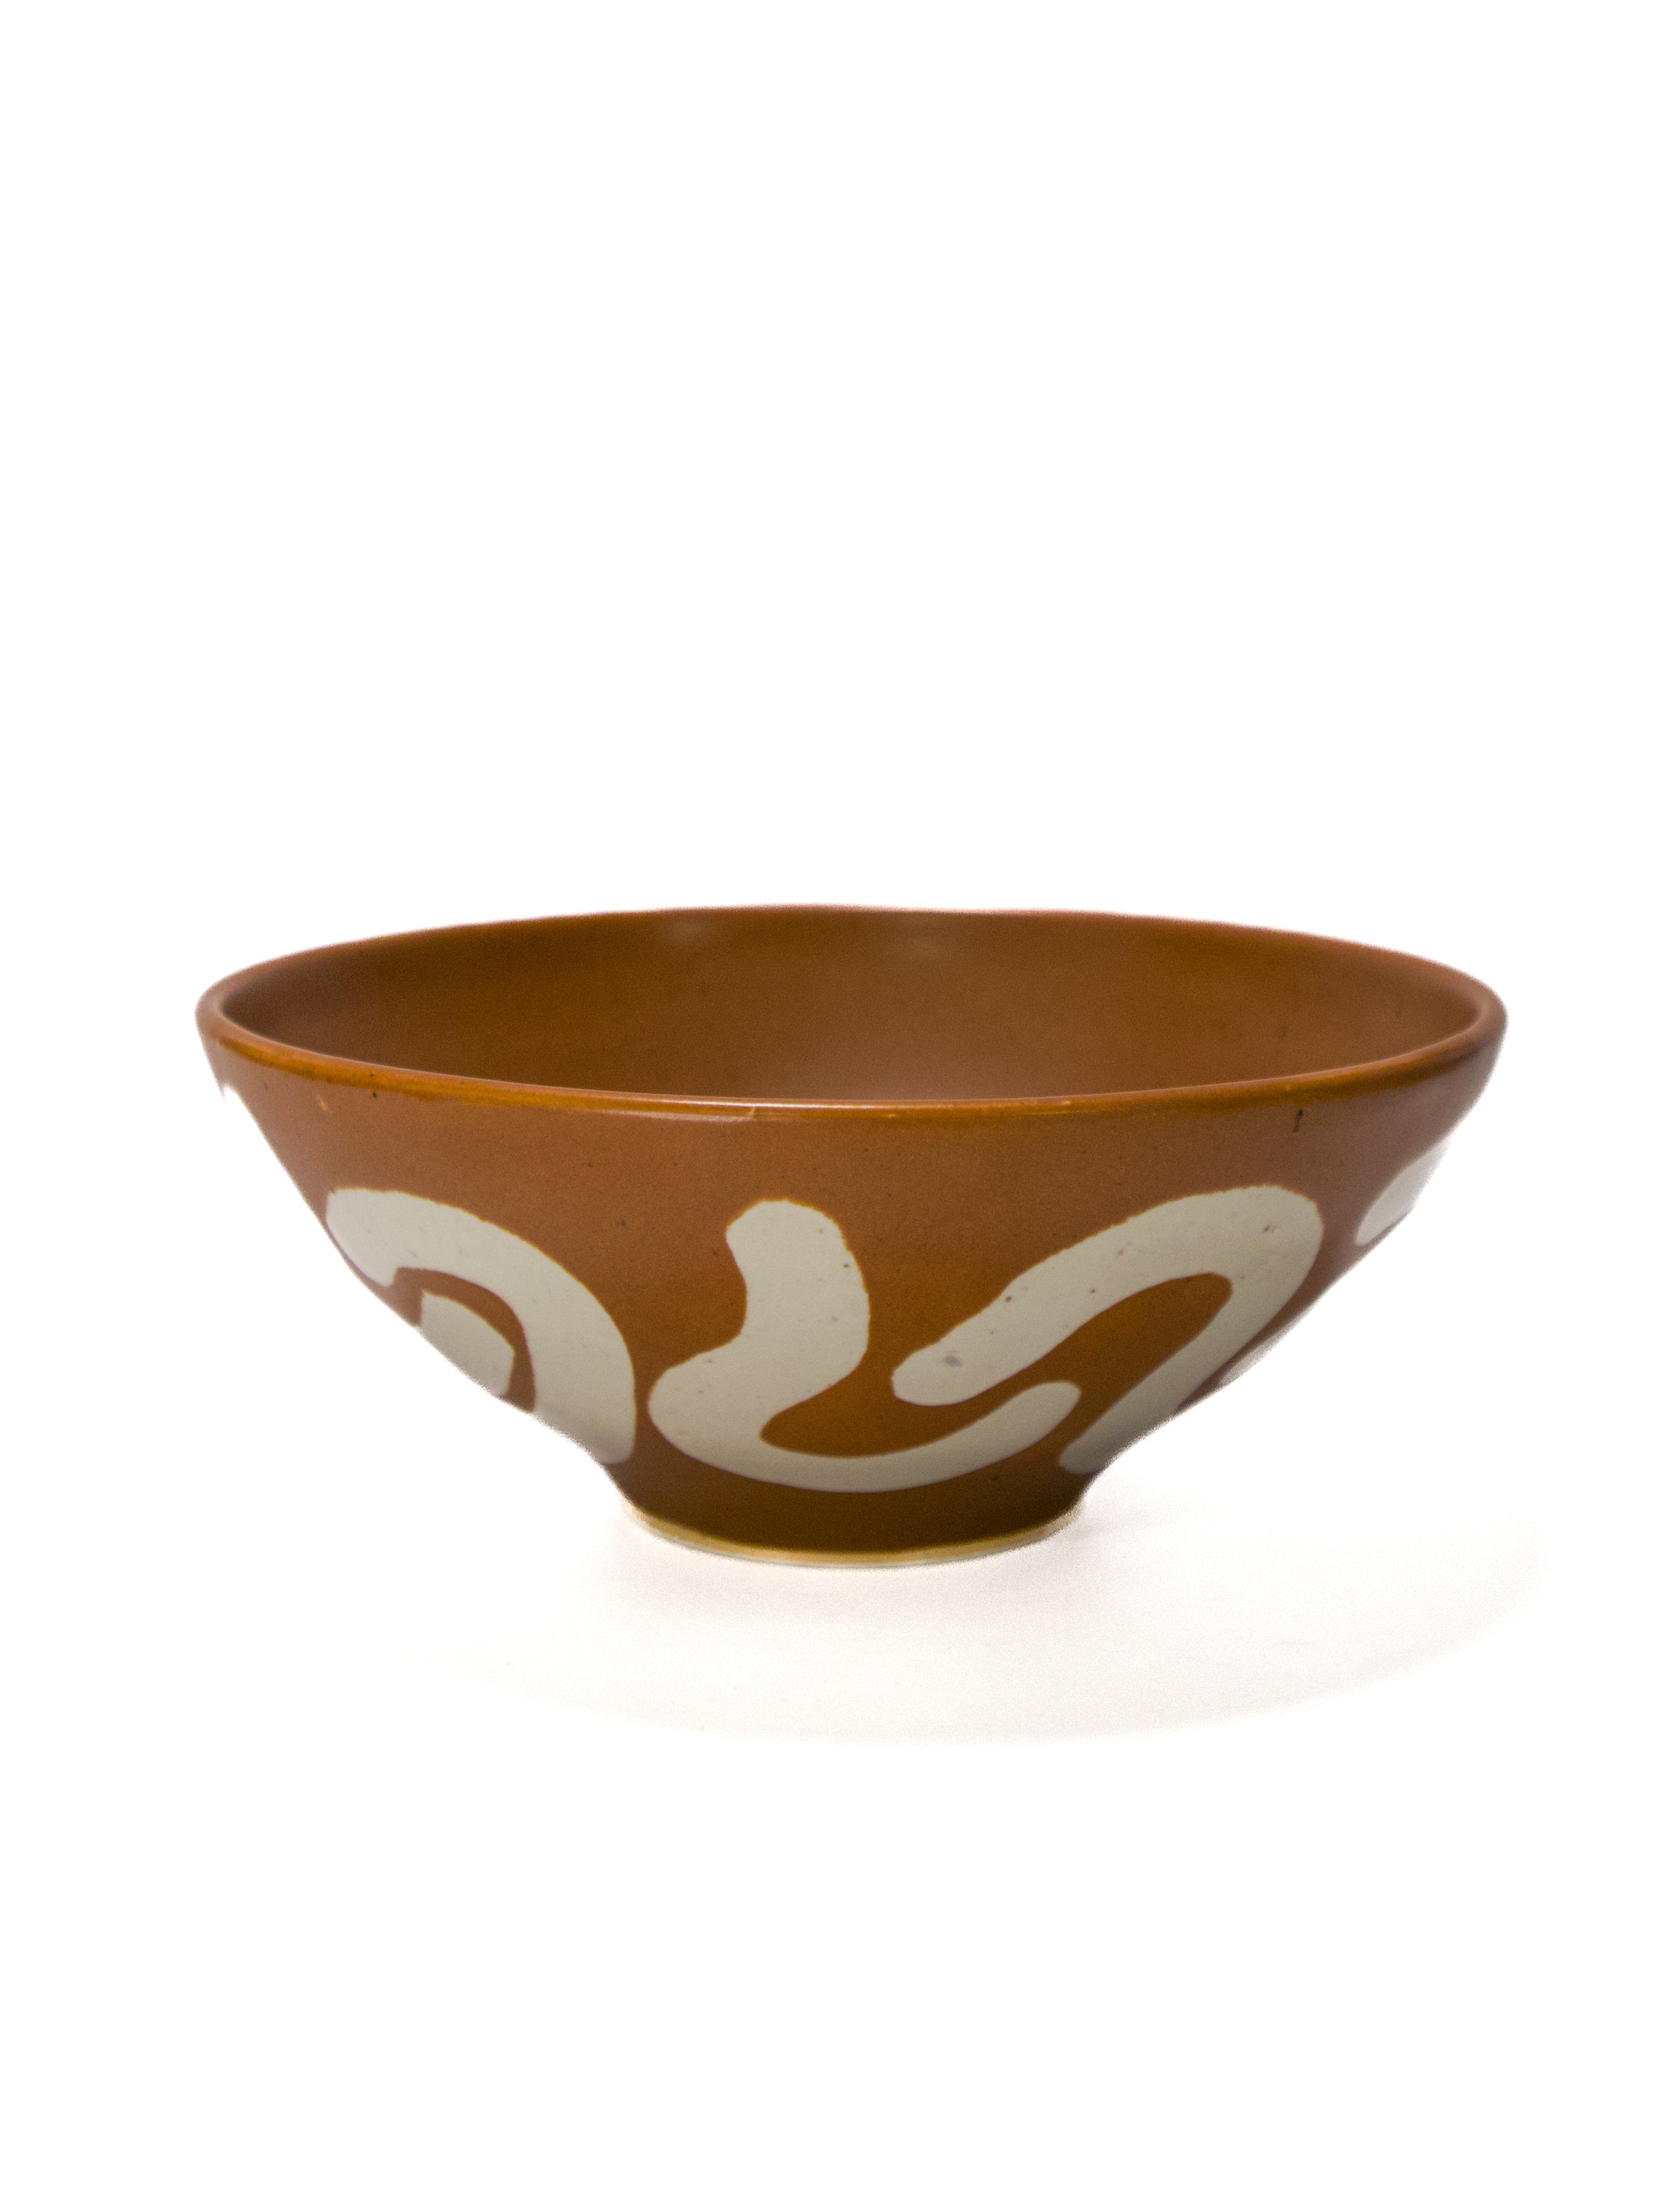 Beginner Ceramics Hazelnut Bowl with Eggshell Shapes